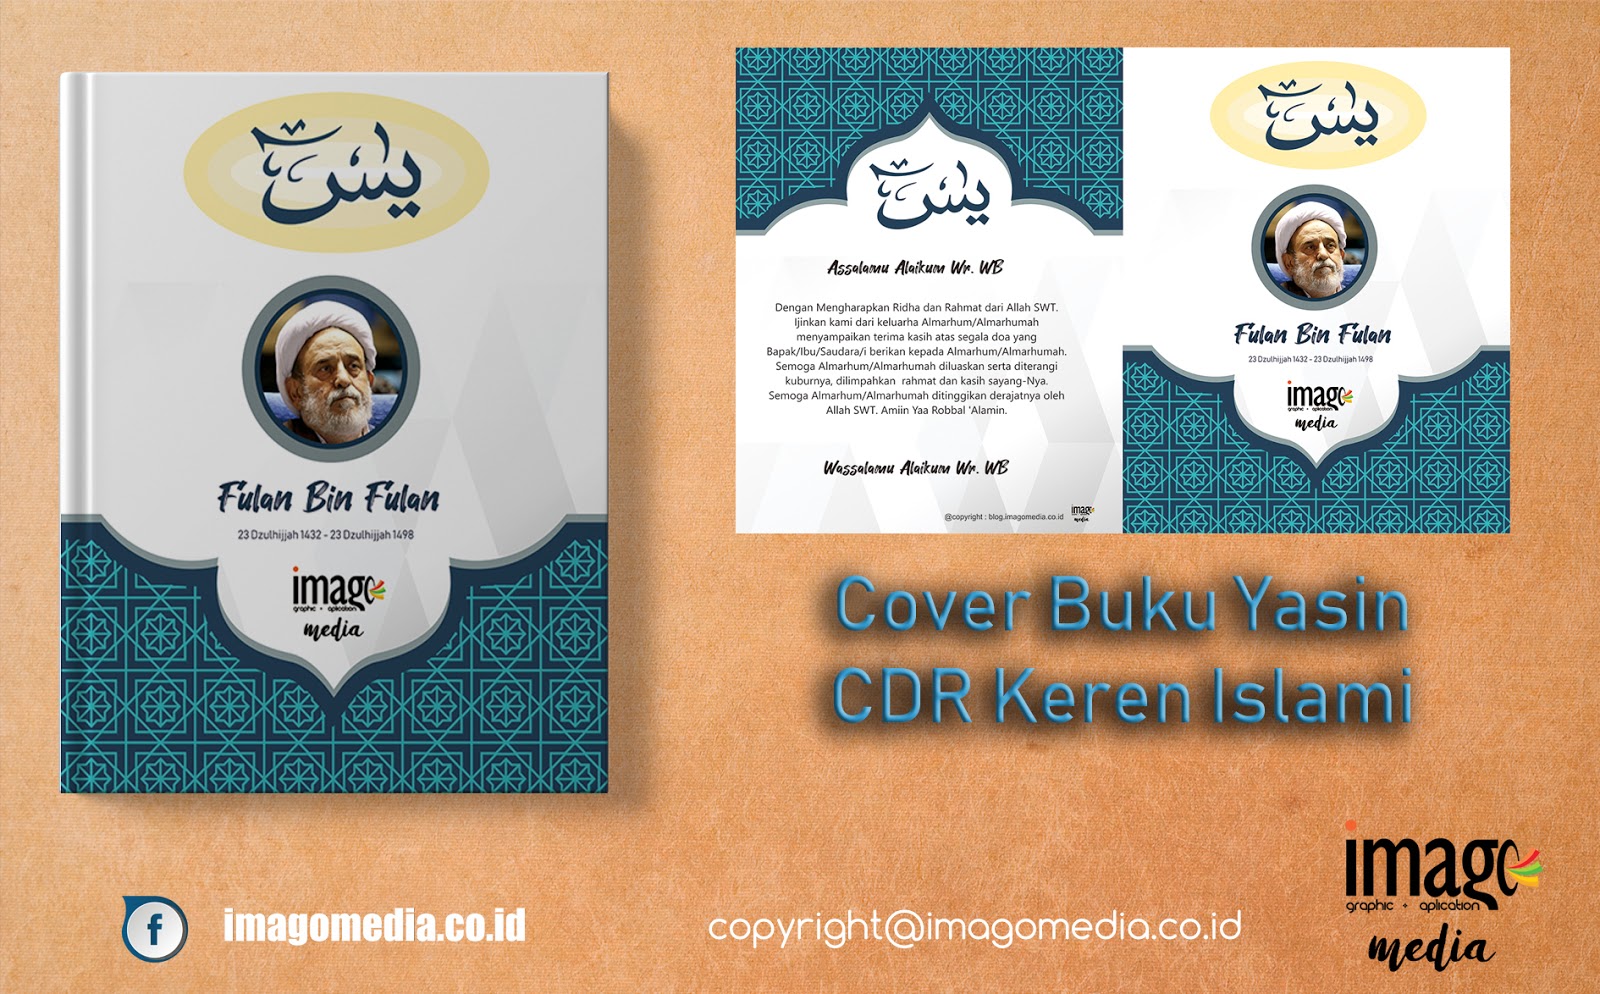  Cover  Buku  Yasin CDR Keren Islami  Imago Media Home Of 